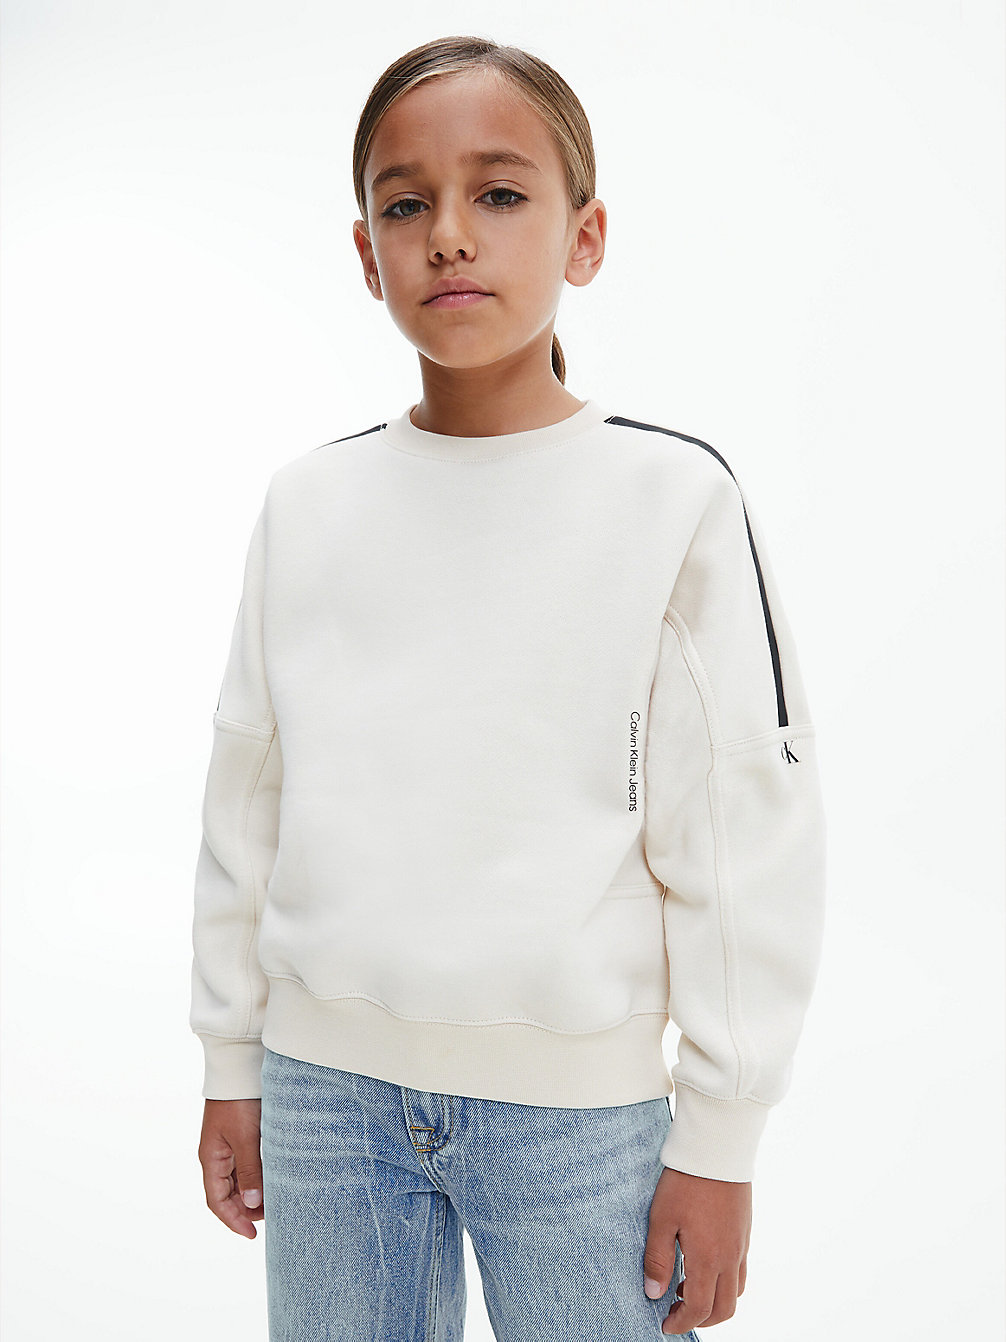 MUSLIN > Relaxed Skater Sweatshirt > undefined boys - Calvin Klein